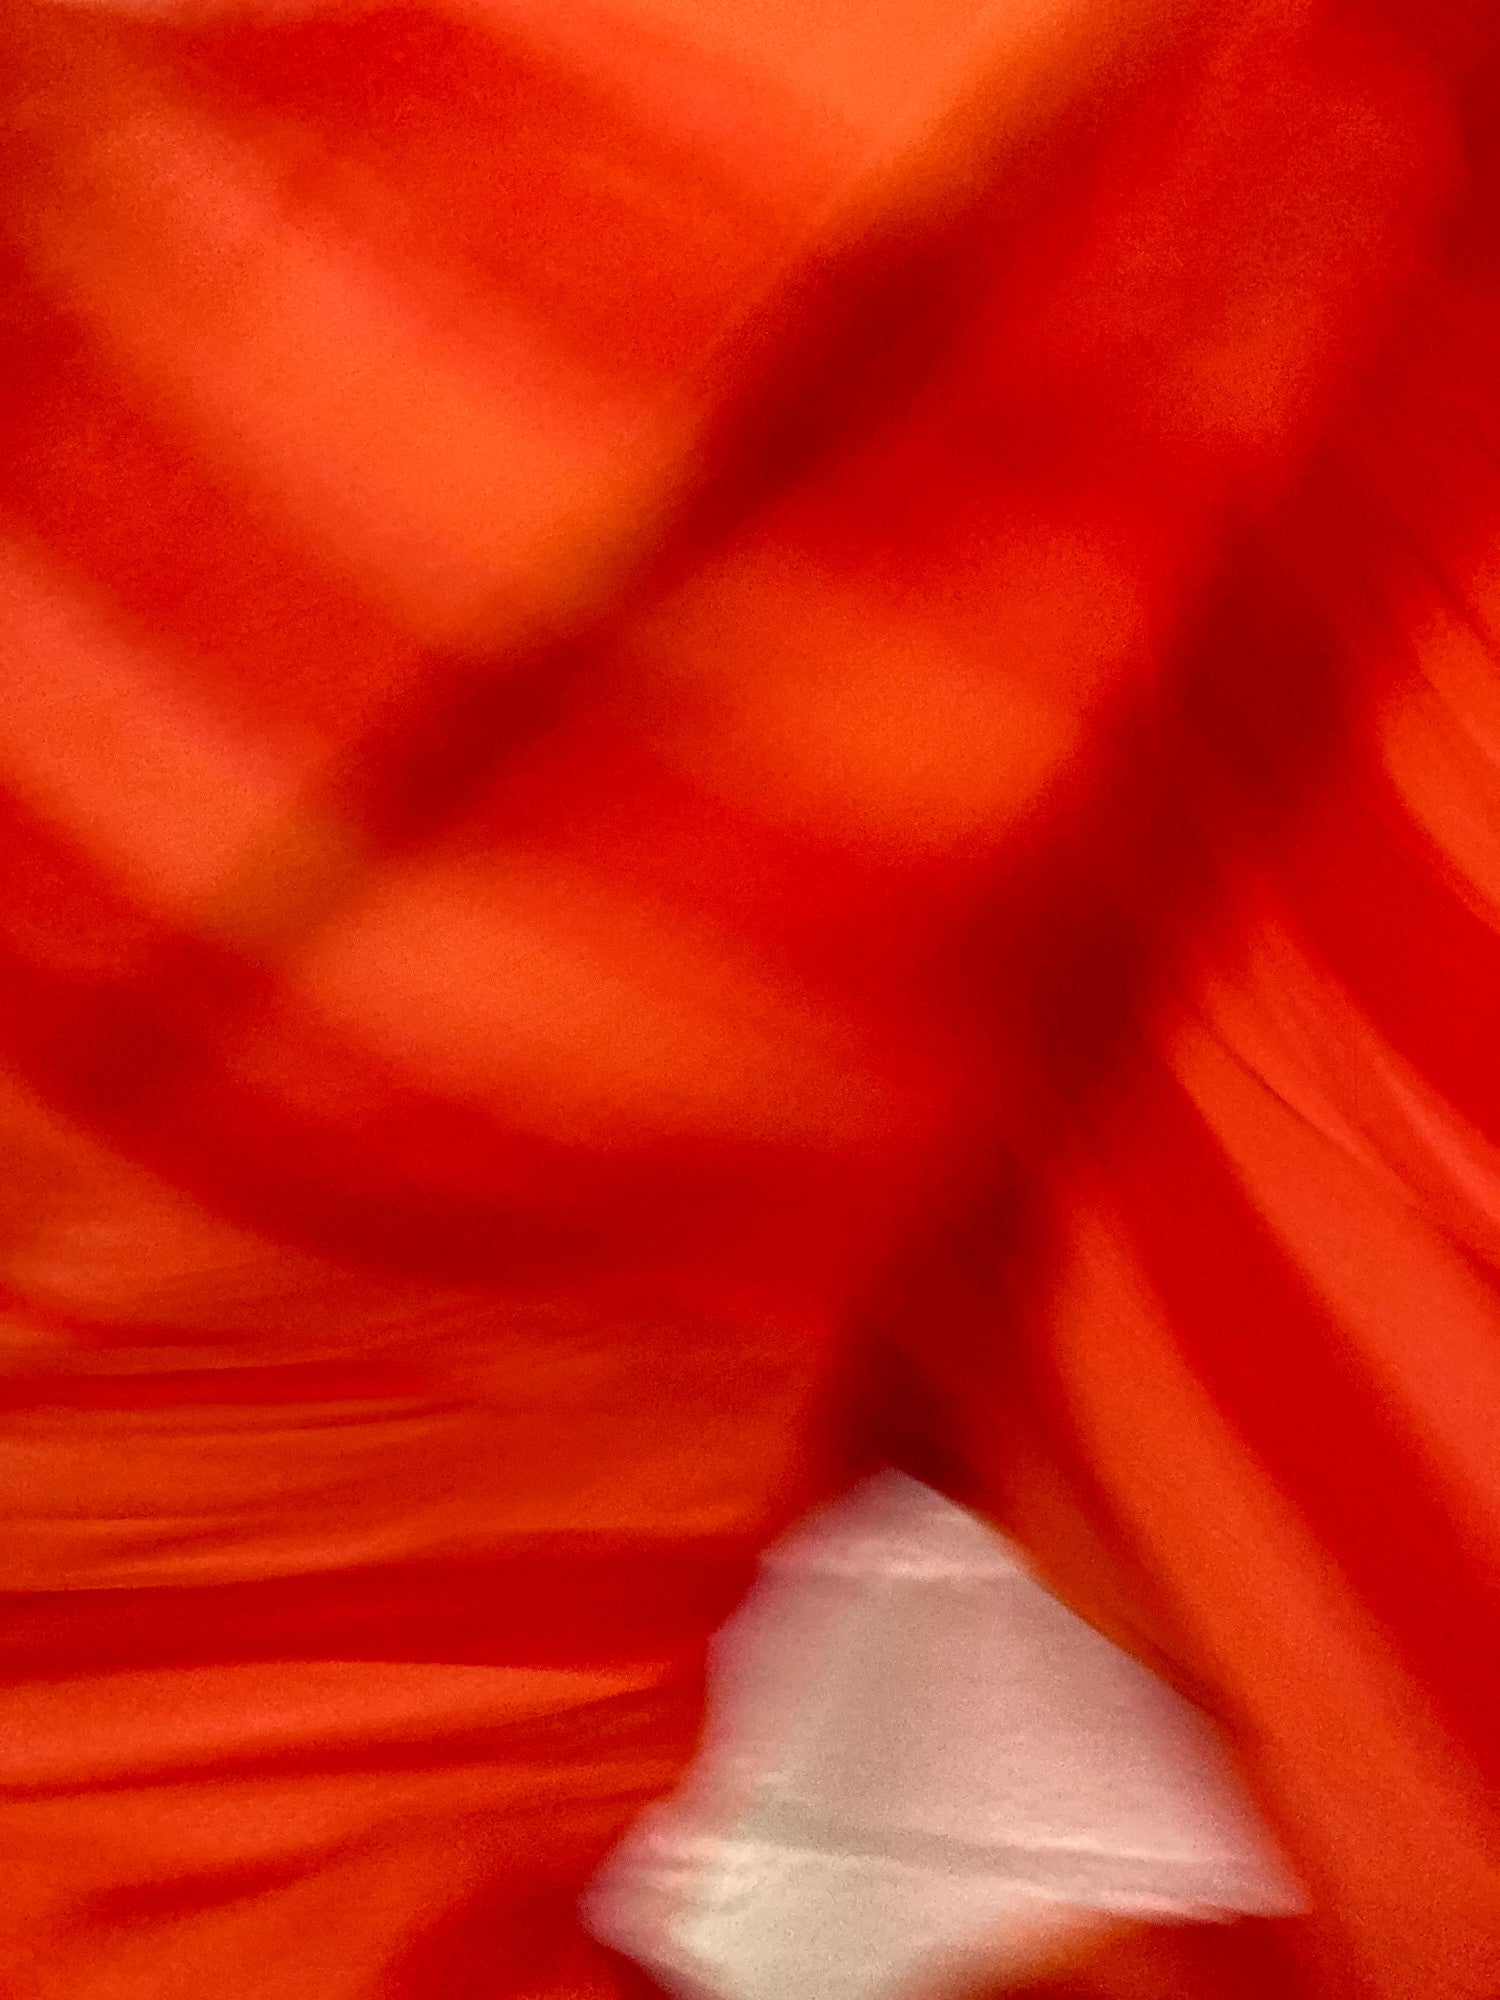 Issey Miyake creased red and orange stripe semi-sheer tshirt - approx S M